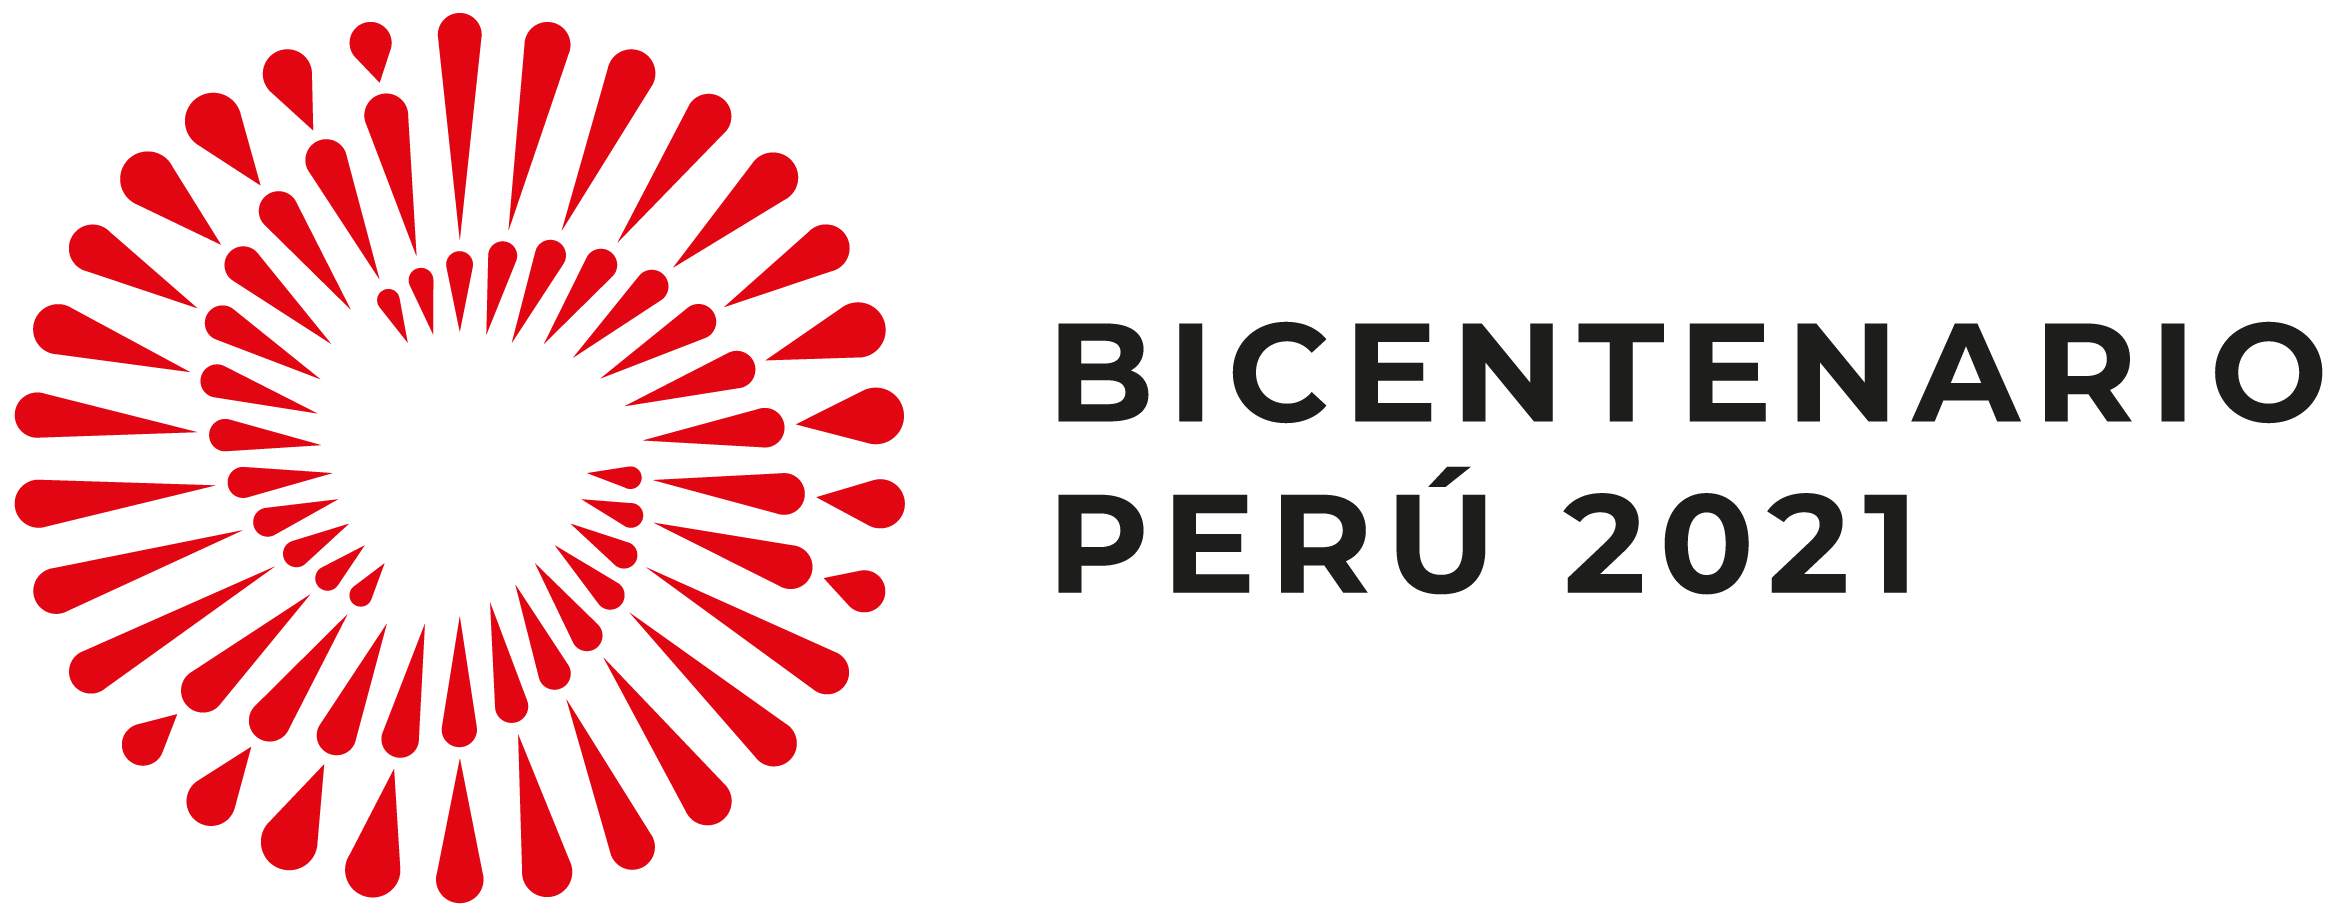 Peru Bicentennial 2021 logo